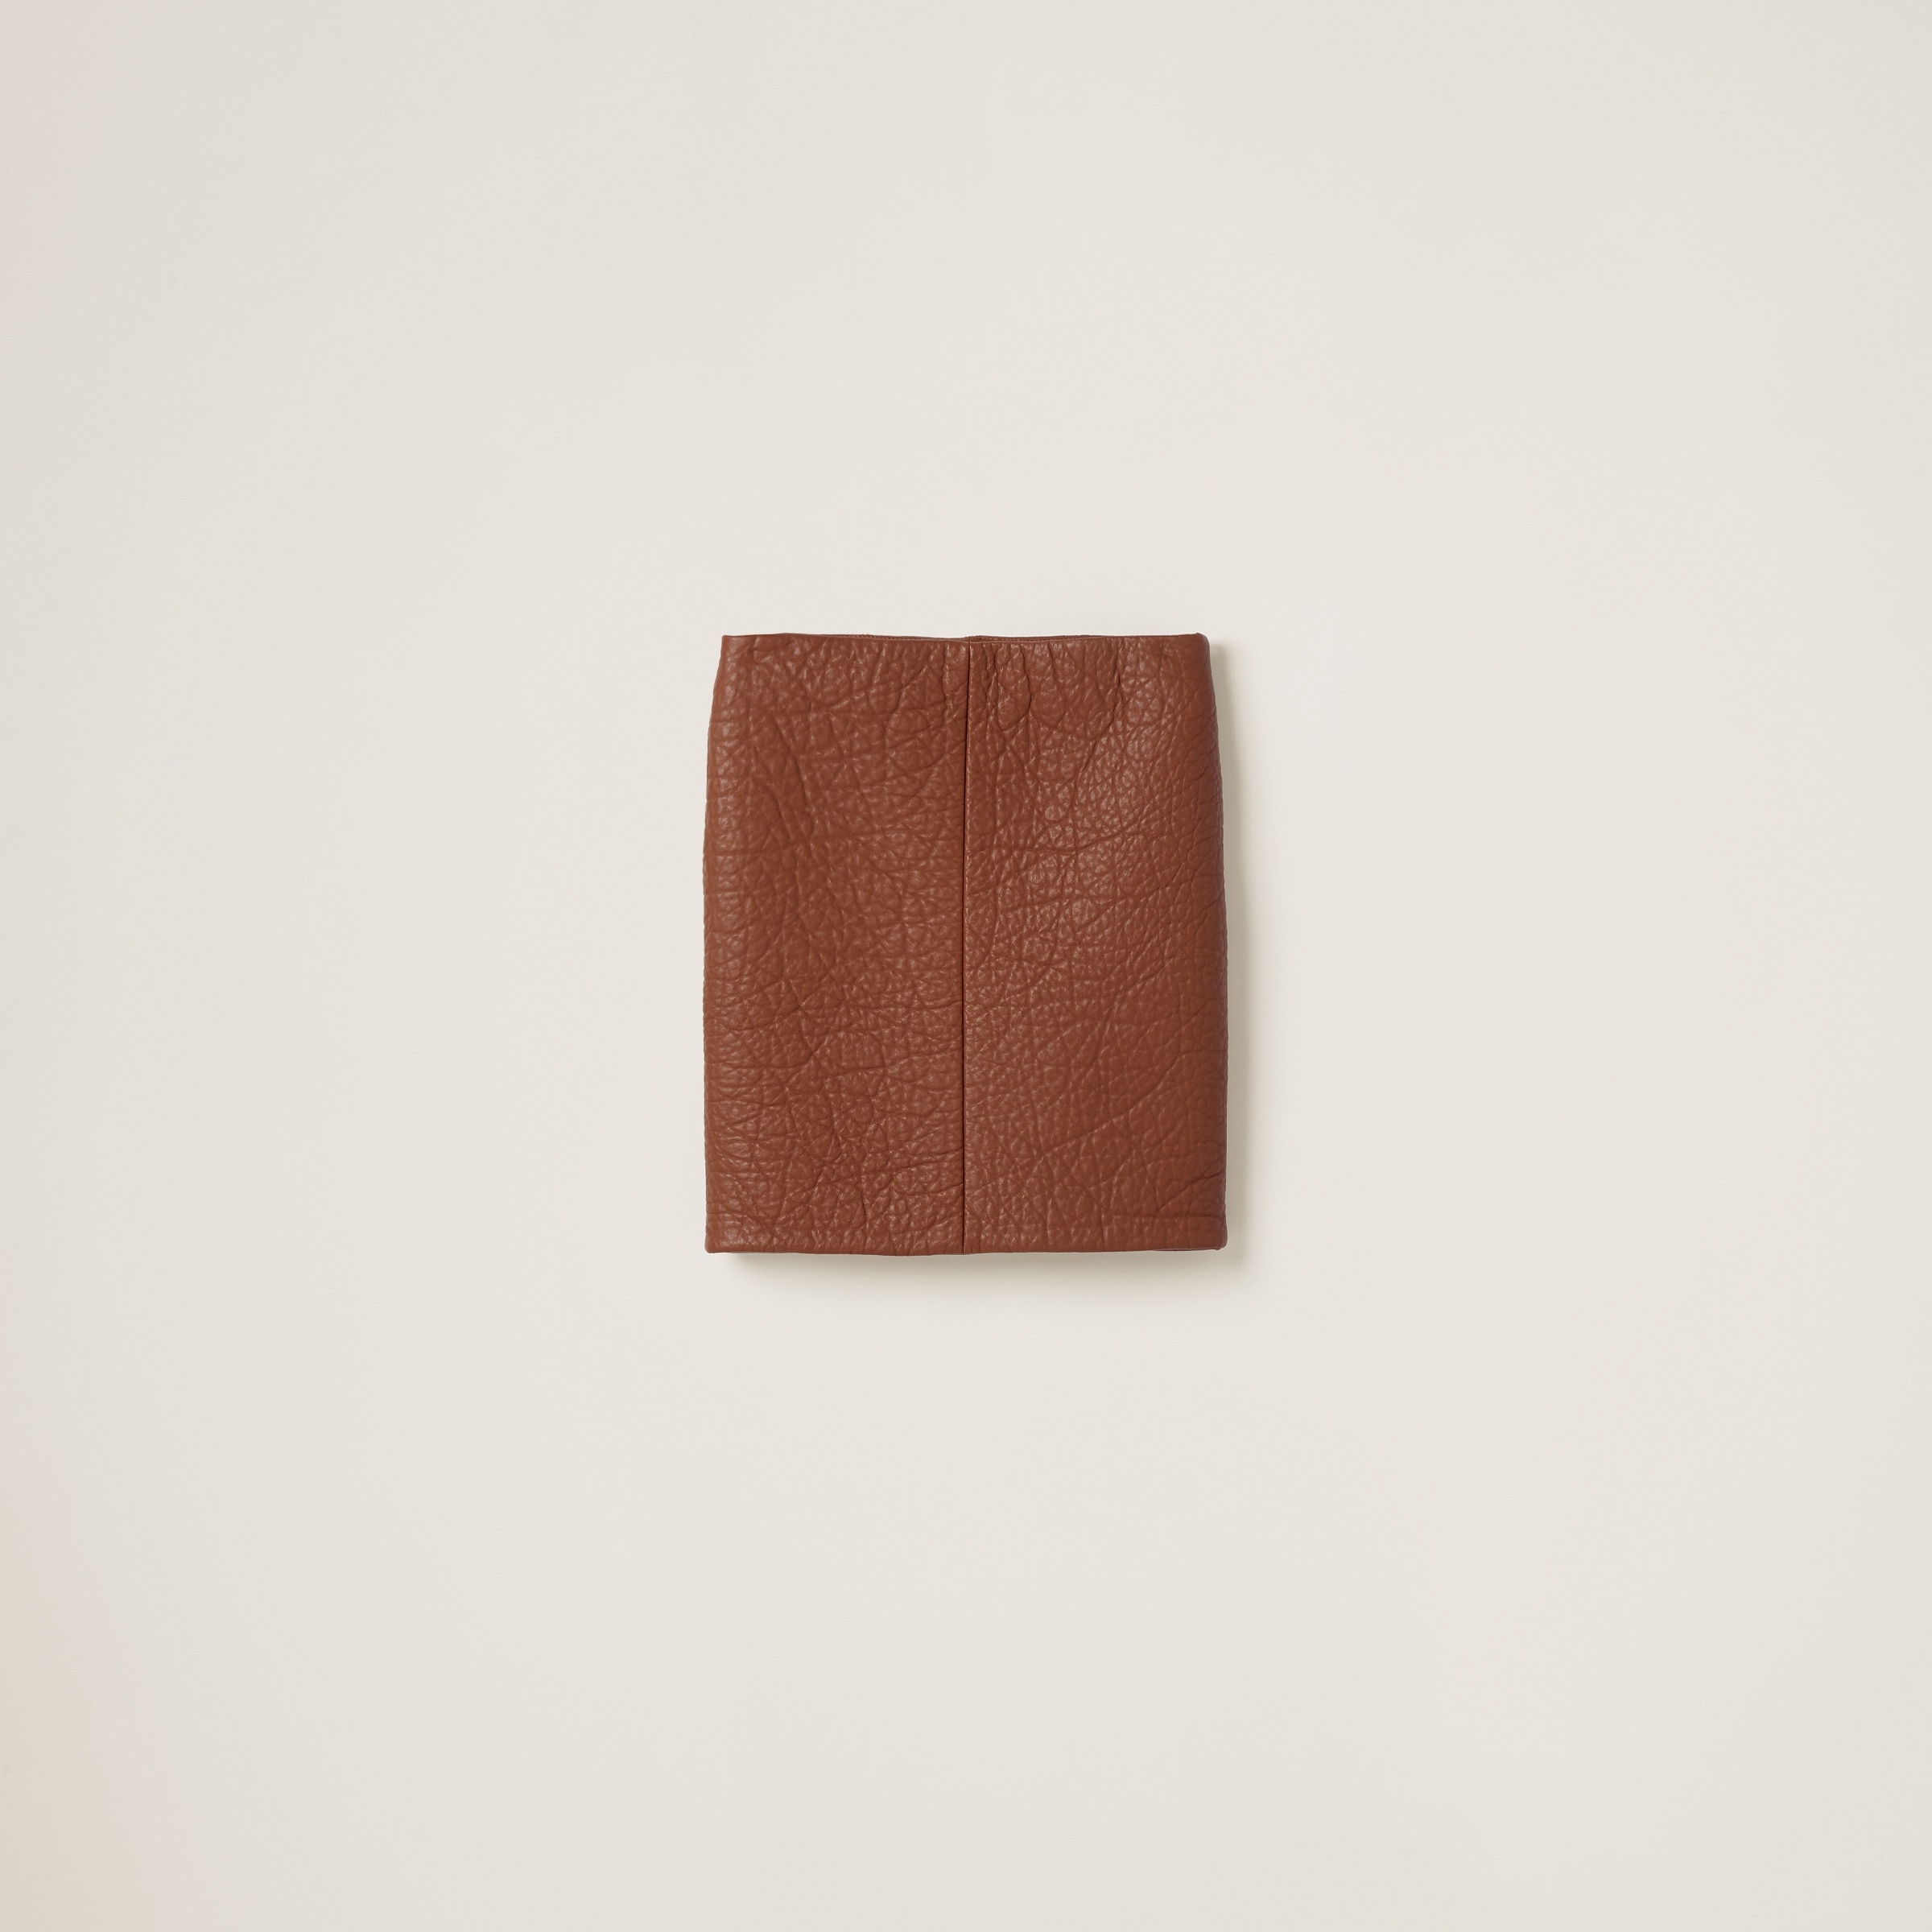 Nappa leather skirt - 1